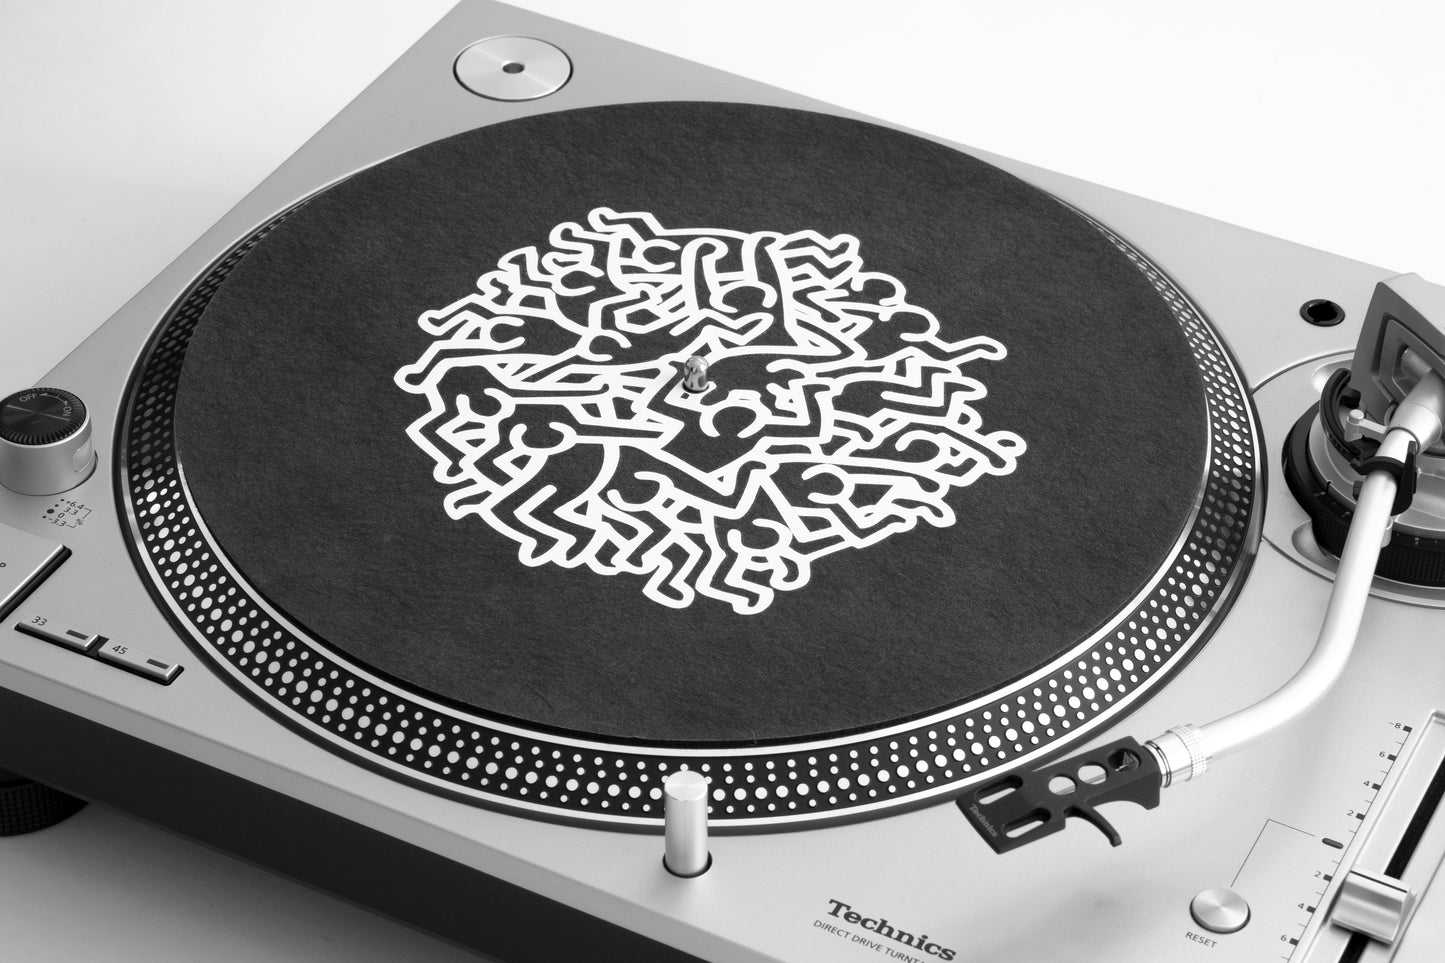 Anti-static Record Mat (Keith Haring)